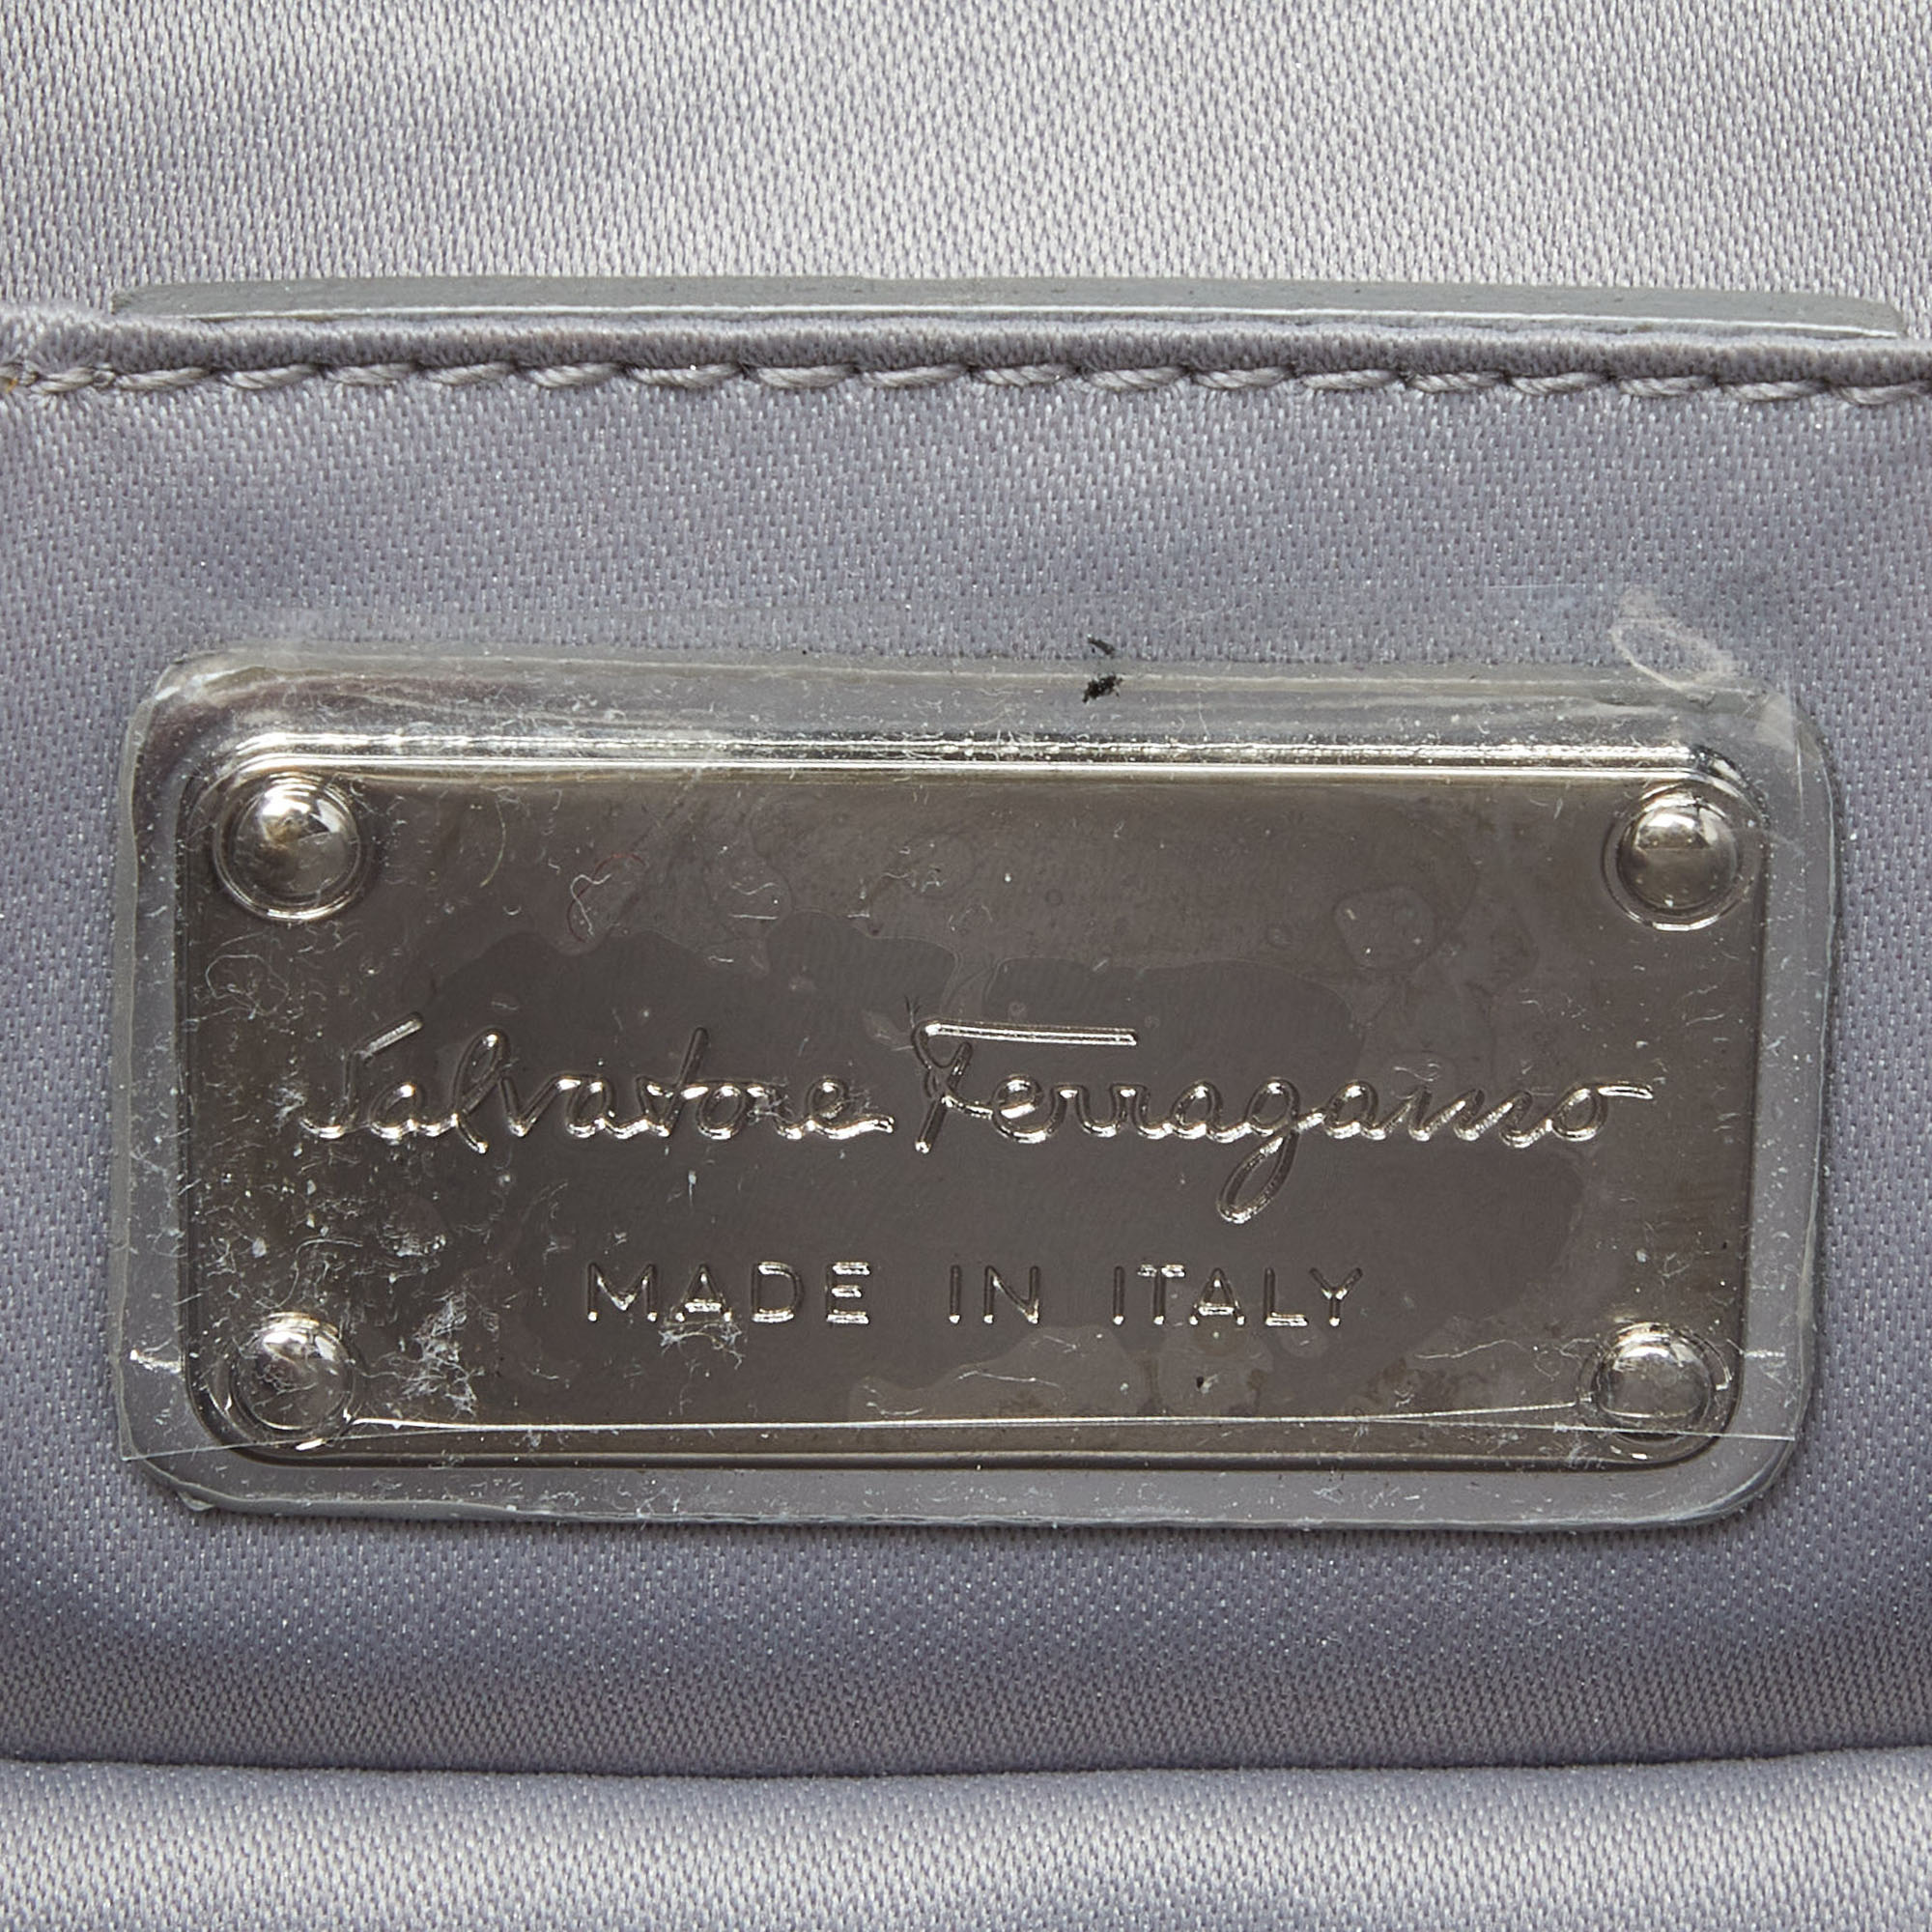 Salvatore Ferragamo Silver Glitter And Laminated Leather Top Handle Bag